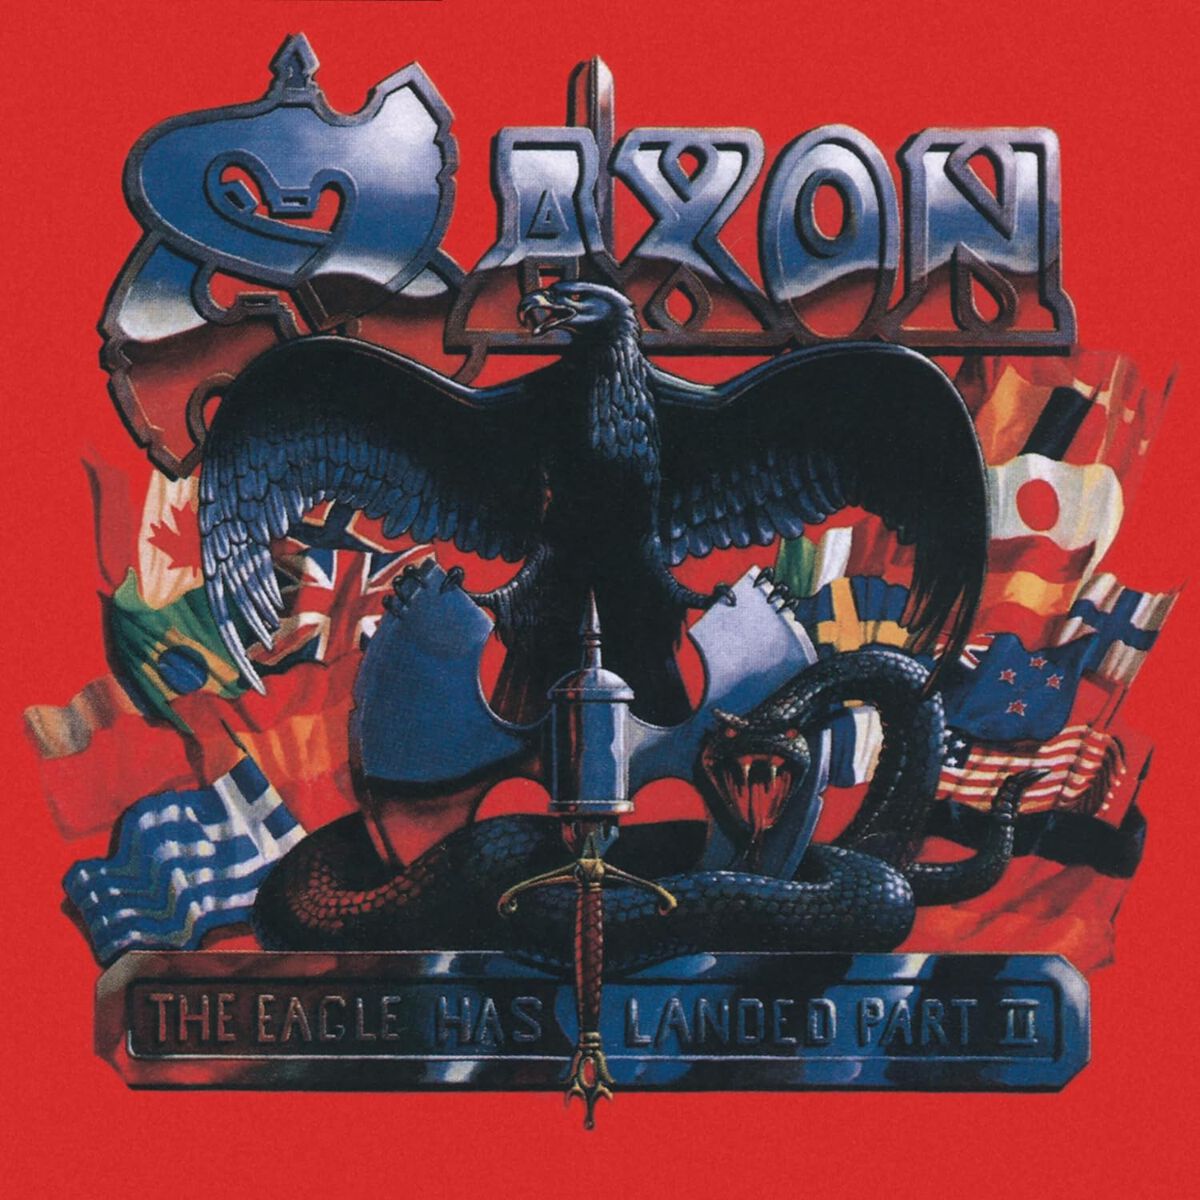 Saxon The eagle has landed Pt.II (Live in Germany, Dez.95) CD multicolor